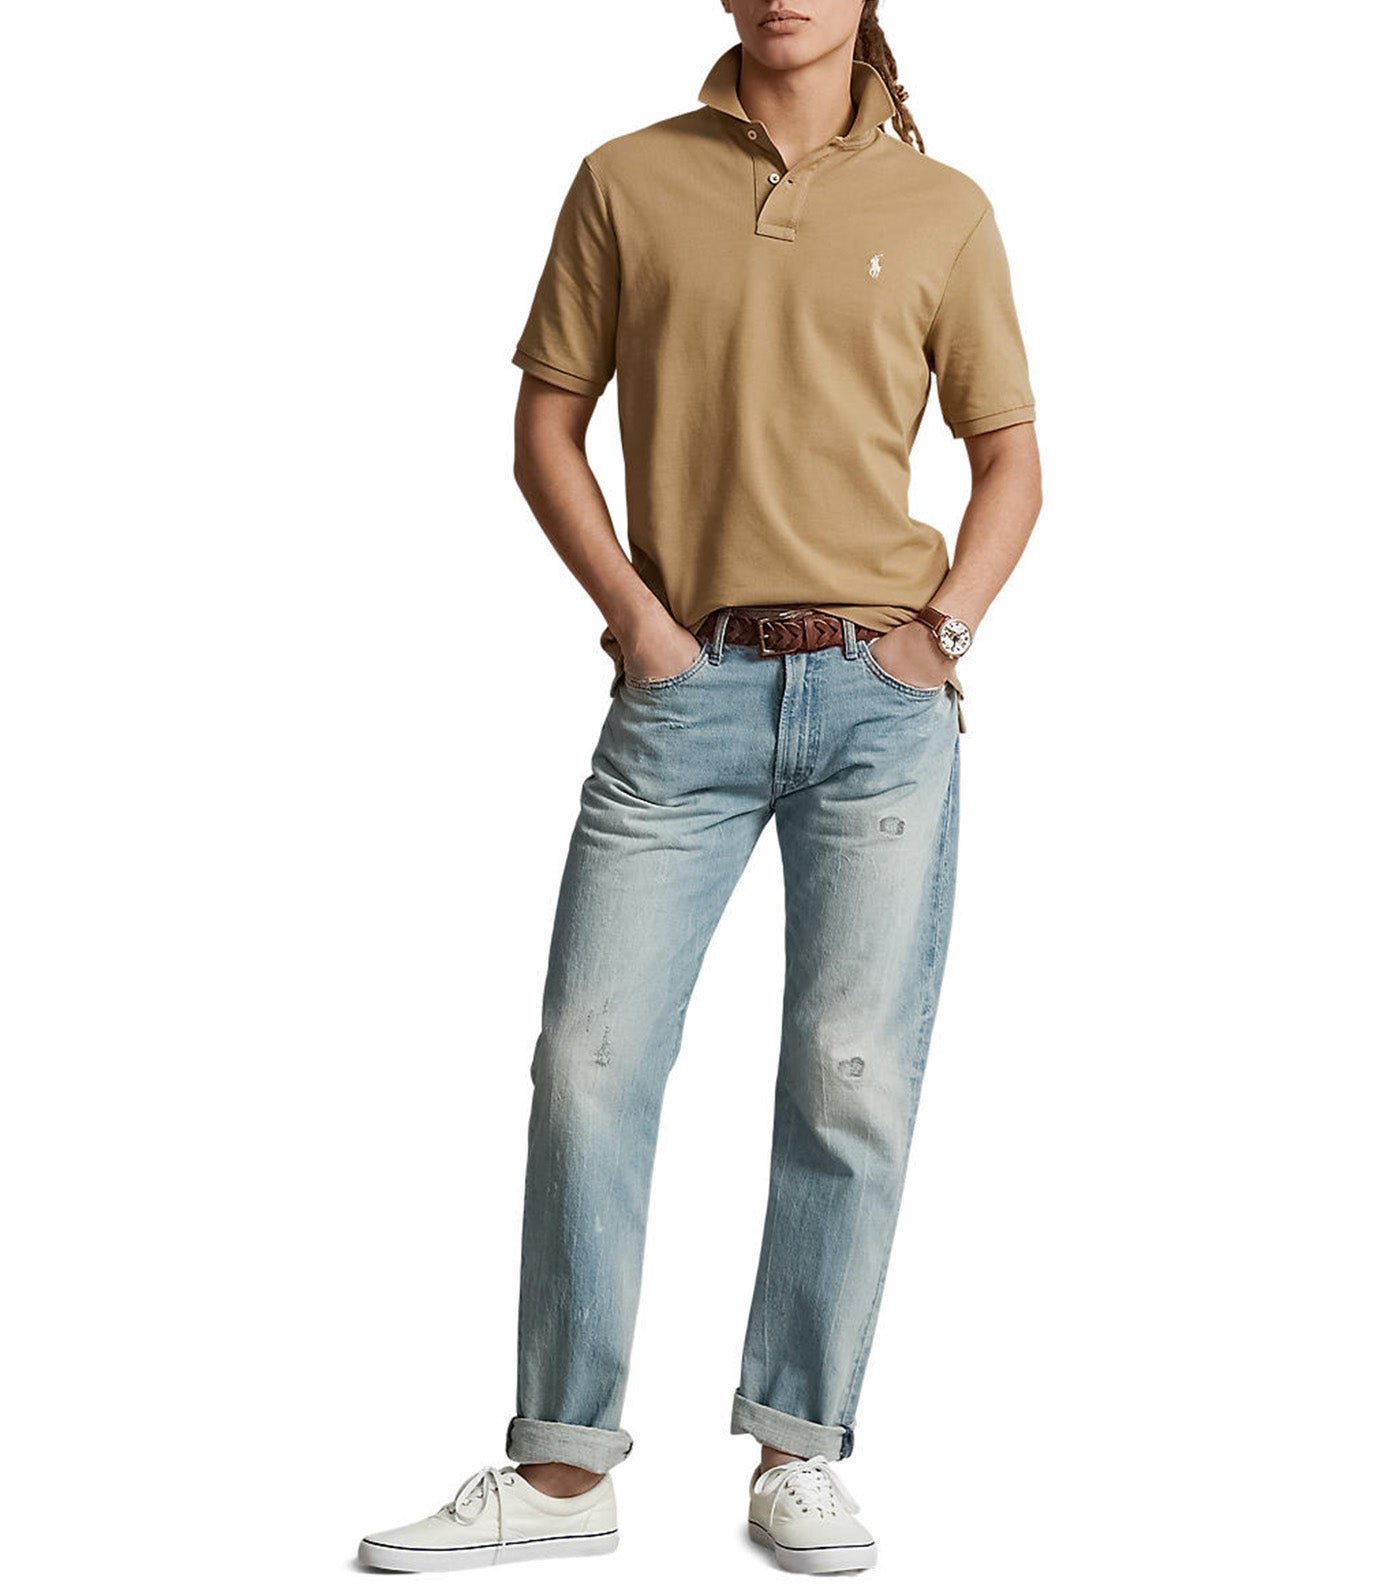 Men's Custom Slim Fit Mesh Polo Shirt Cafe Tan